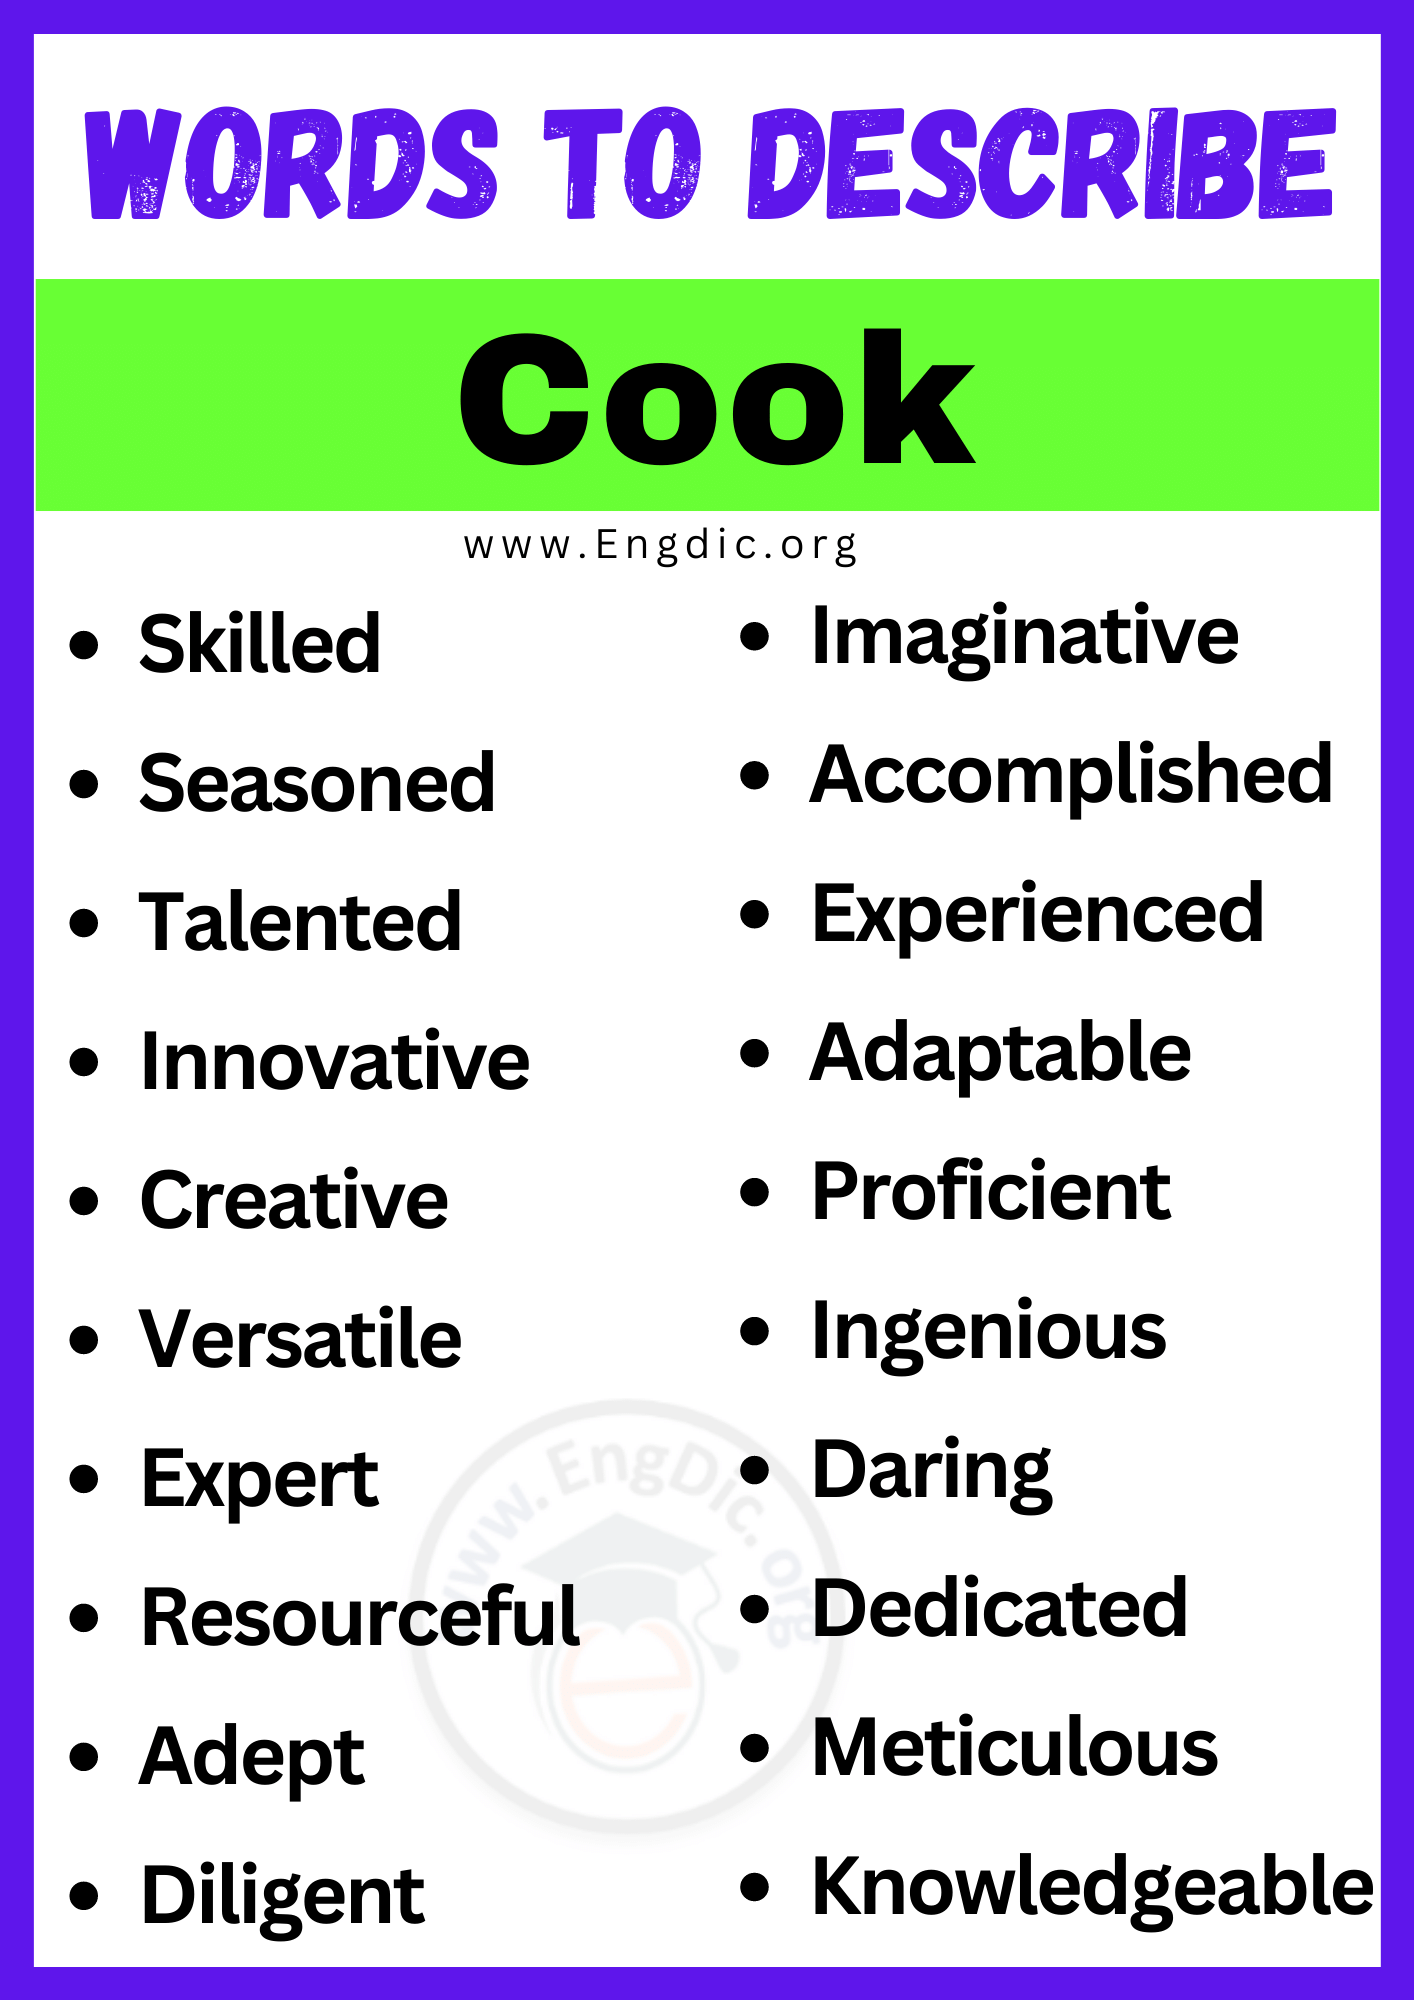 Words to Describe Cook